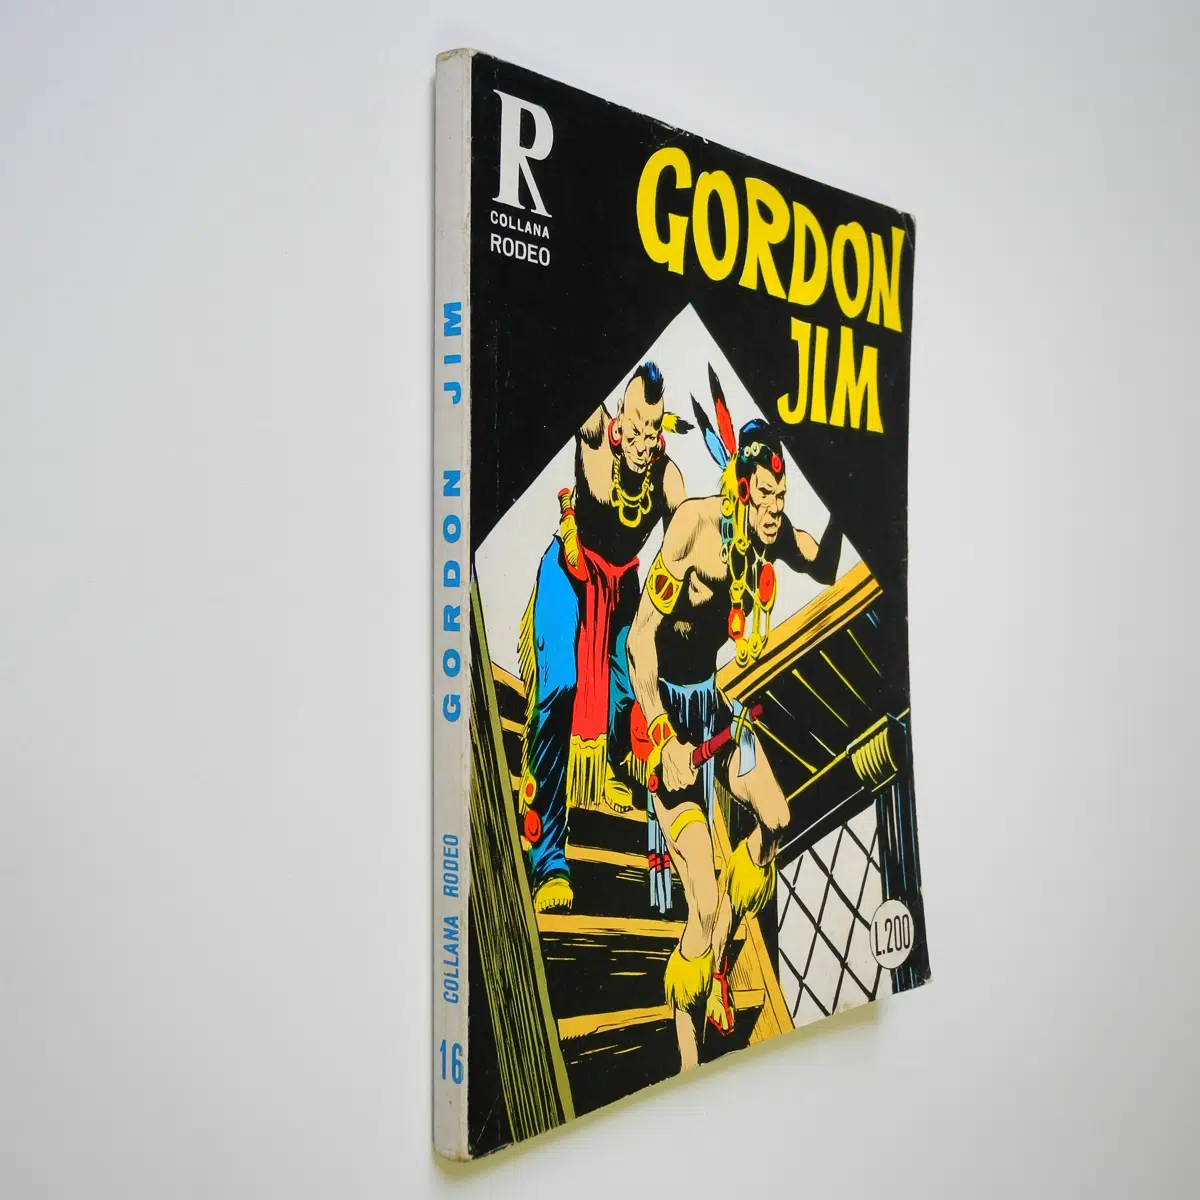 Collana Rodeo n. 16 Gordon Jim